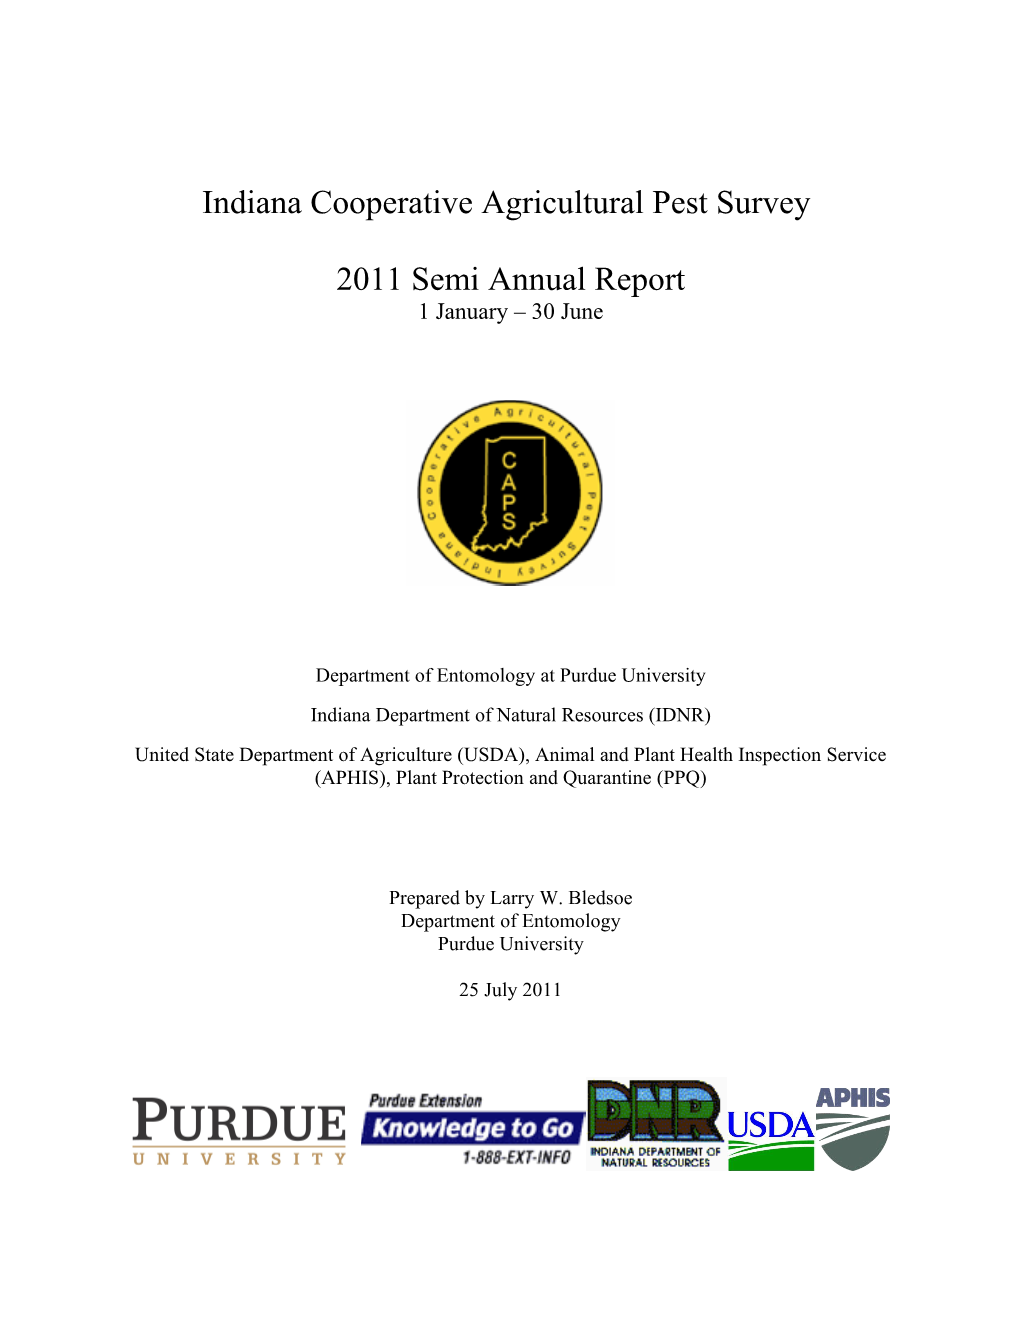 Indiana CAPS SSC Semi Annual Report, 25 July 2011